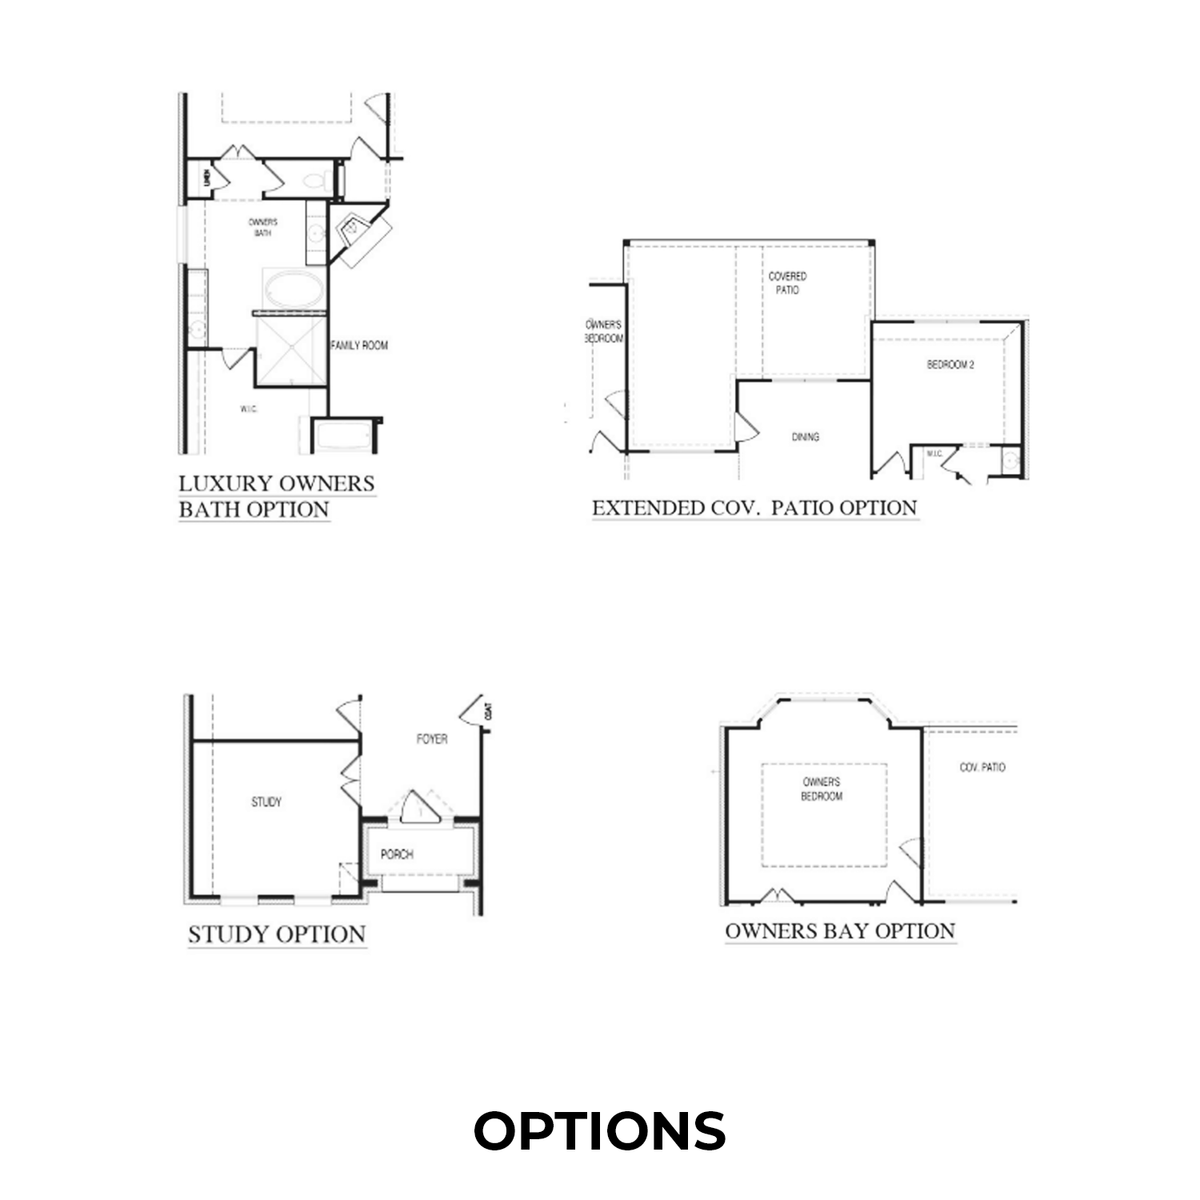 2 - The Garner B floor plan layout for 136 Mason Lane in Davidson Homes' The Reserve at Potranco Oaks community.